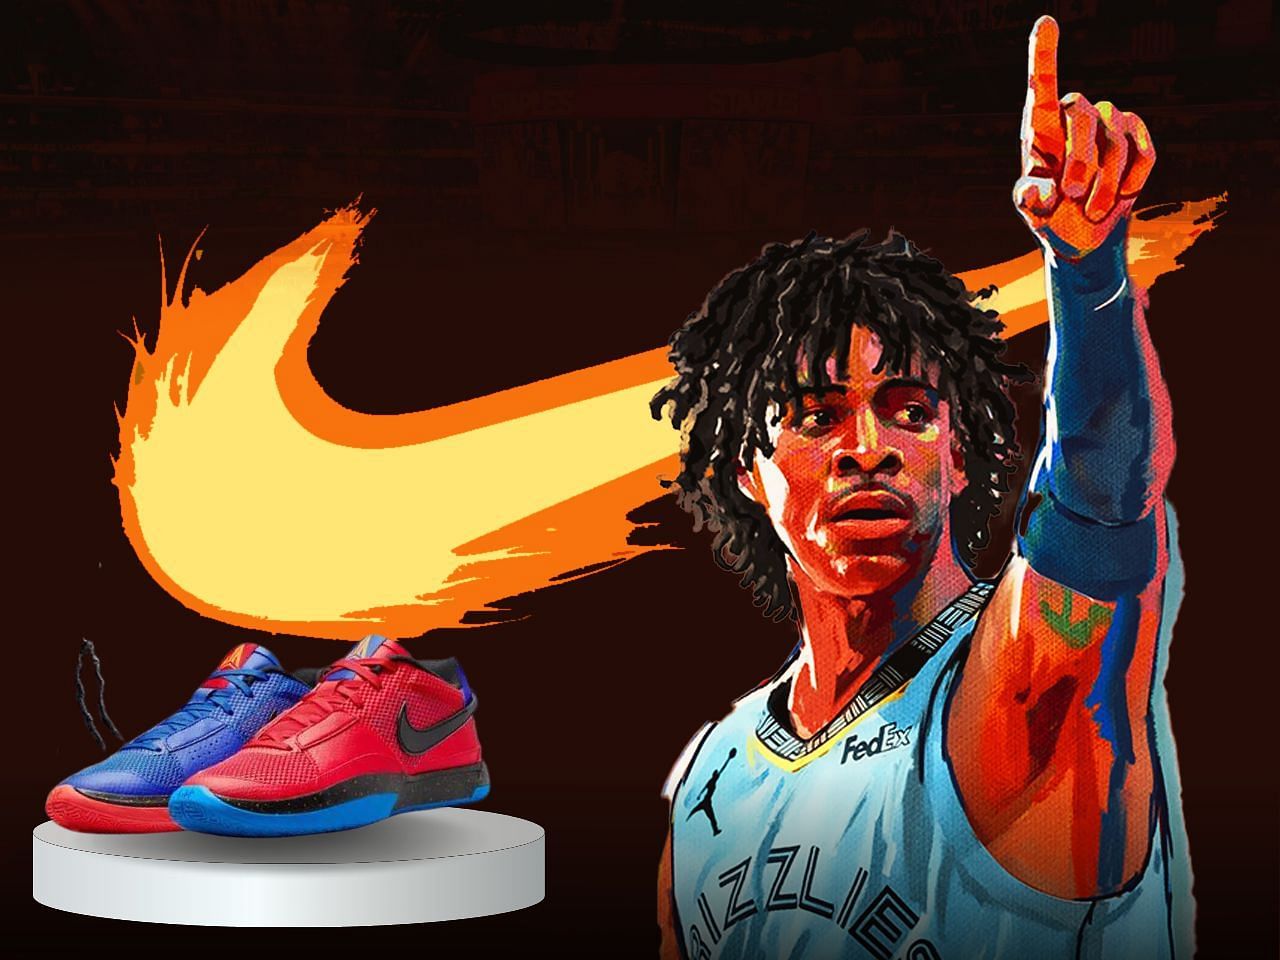 Nike Removes Ja Morant's Signature Shoe From App, Website